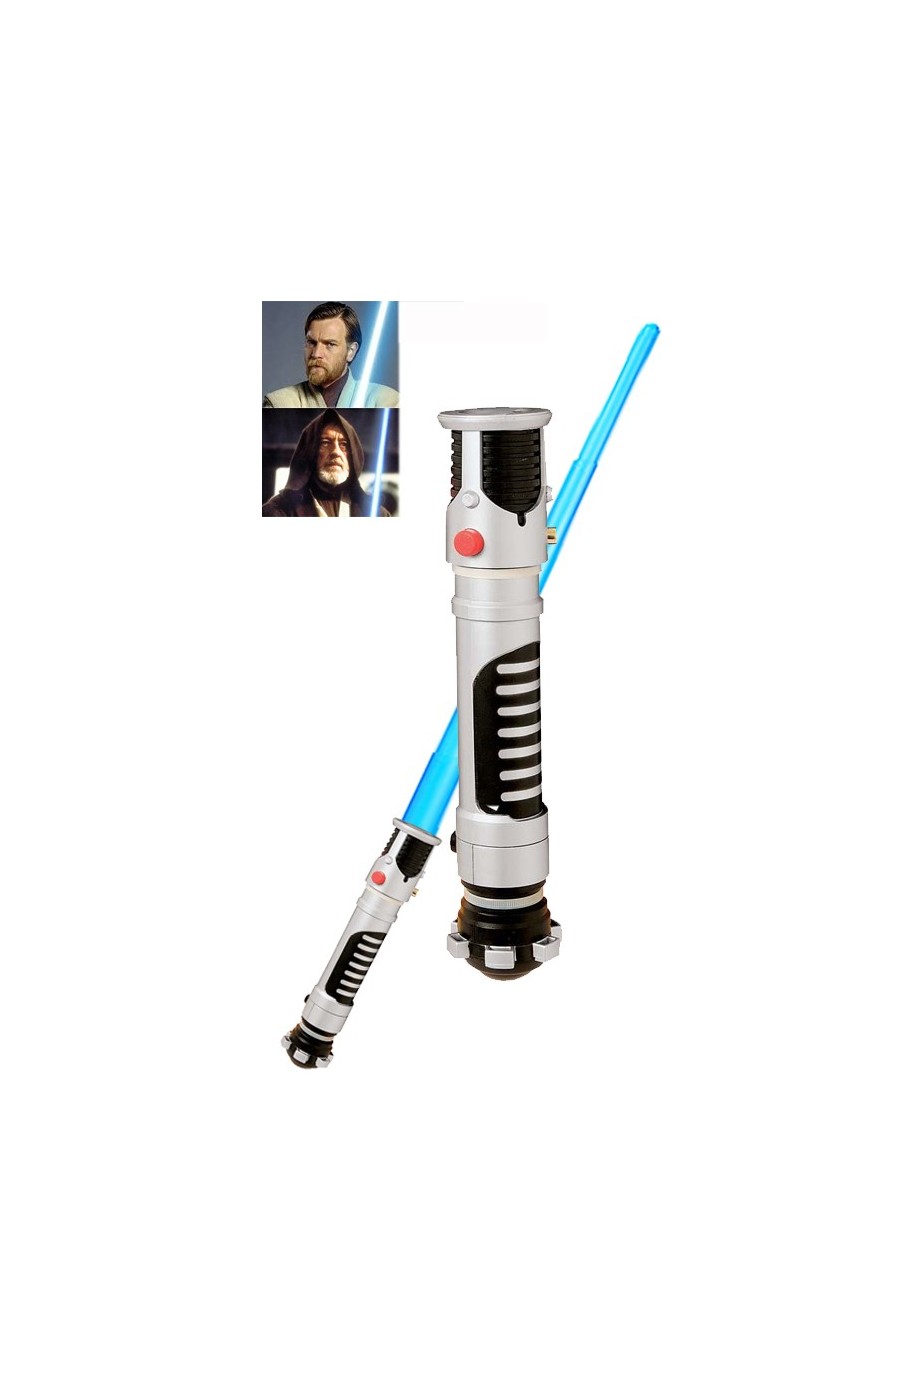 Spada Laser Obi Wan Kenobi dal film Star Wars estensione azzurra